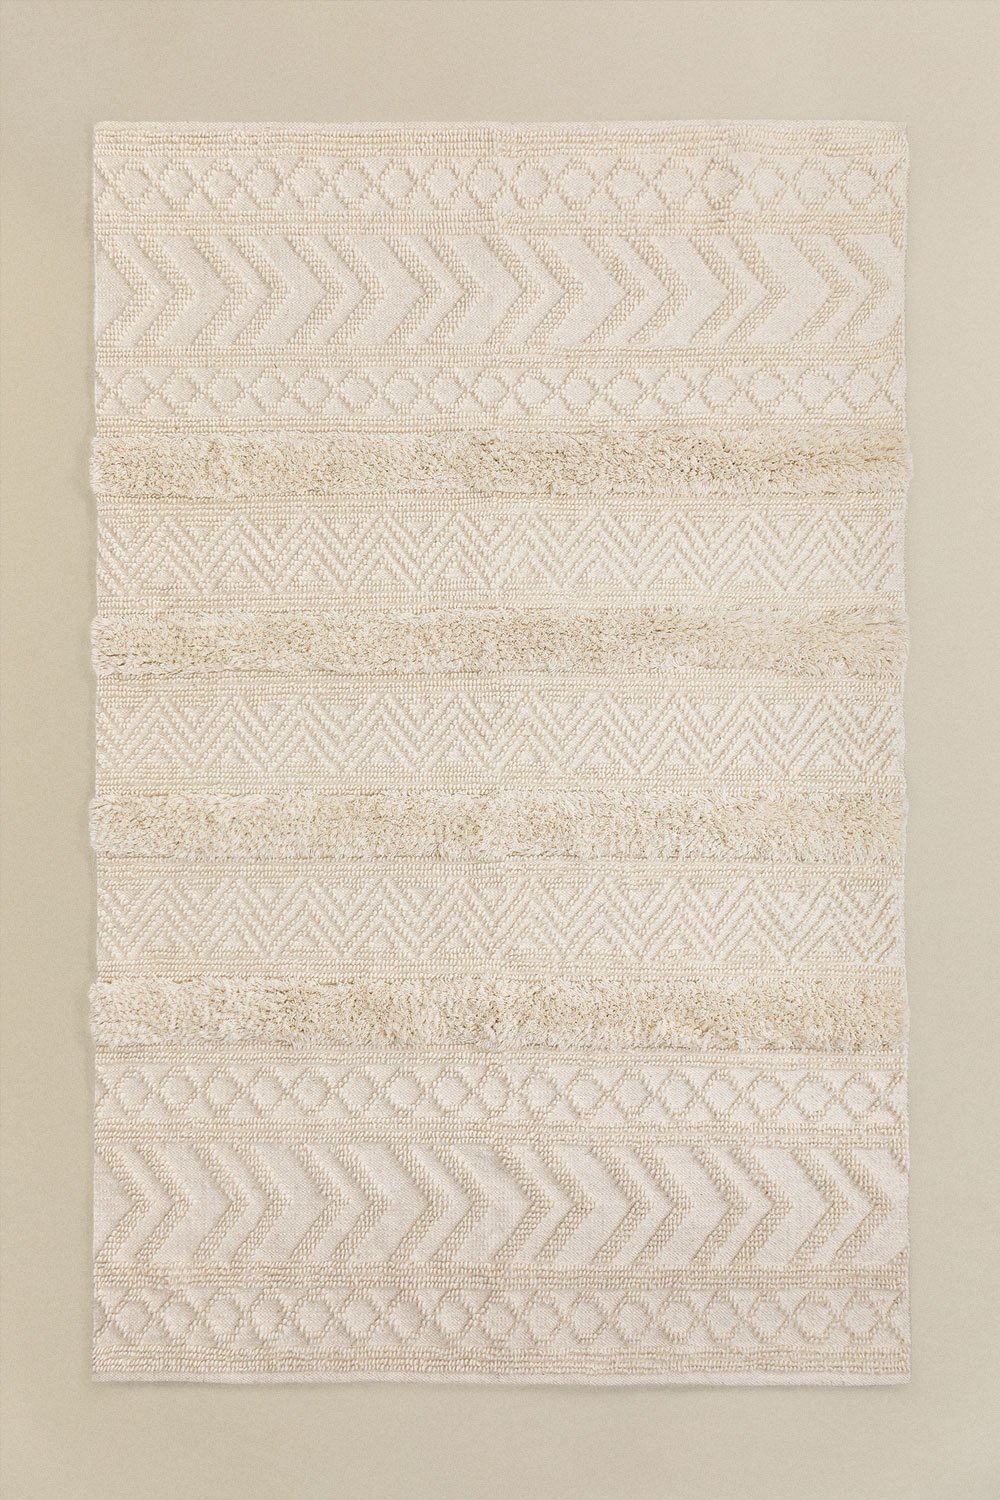 Vloerkleed van wol en katoen (255x165 cm) Lissi, galerij beeld 1